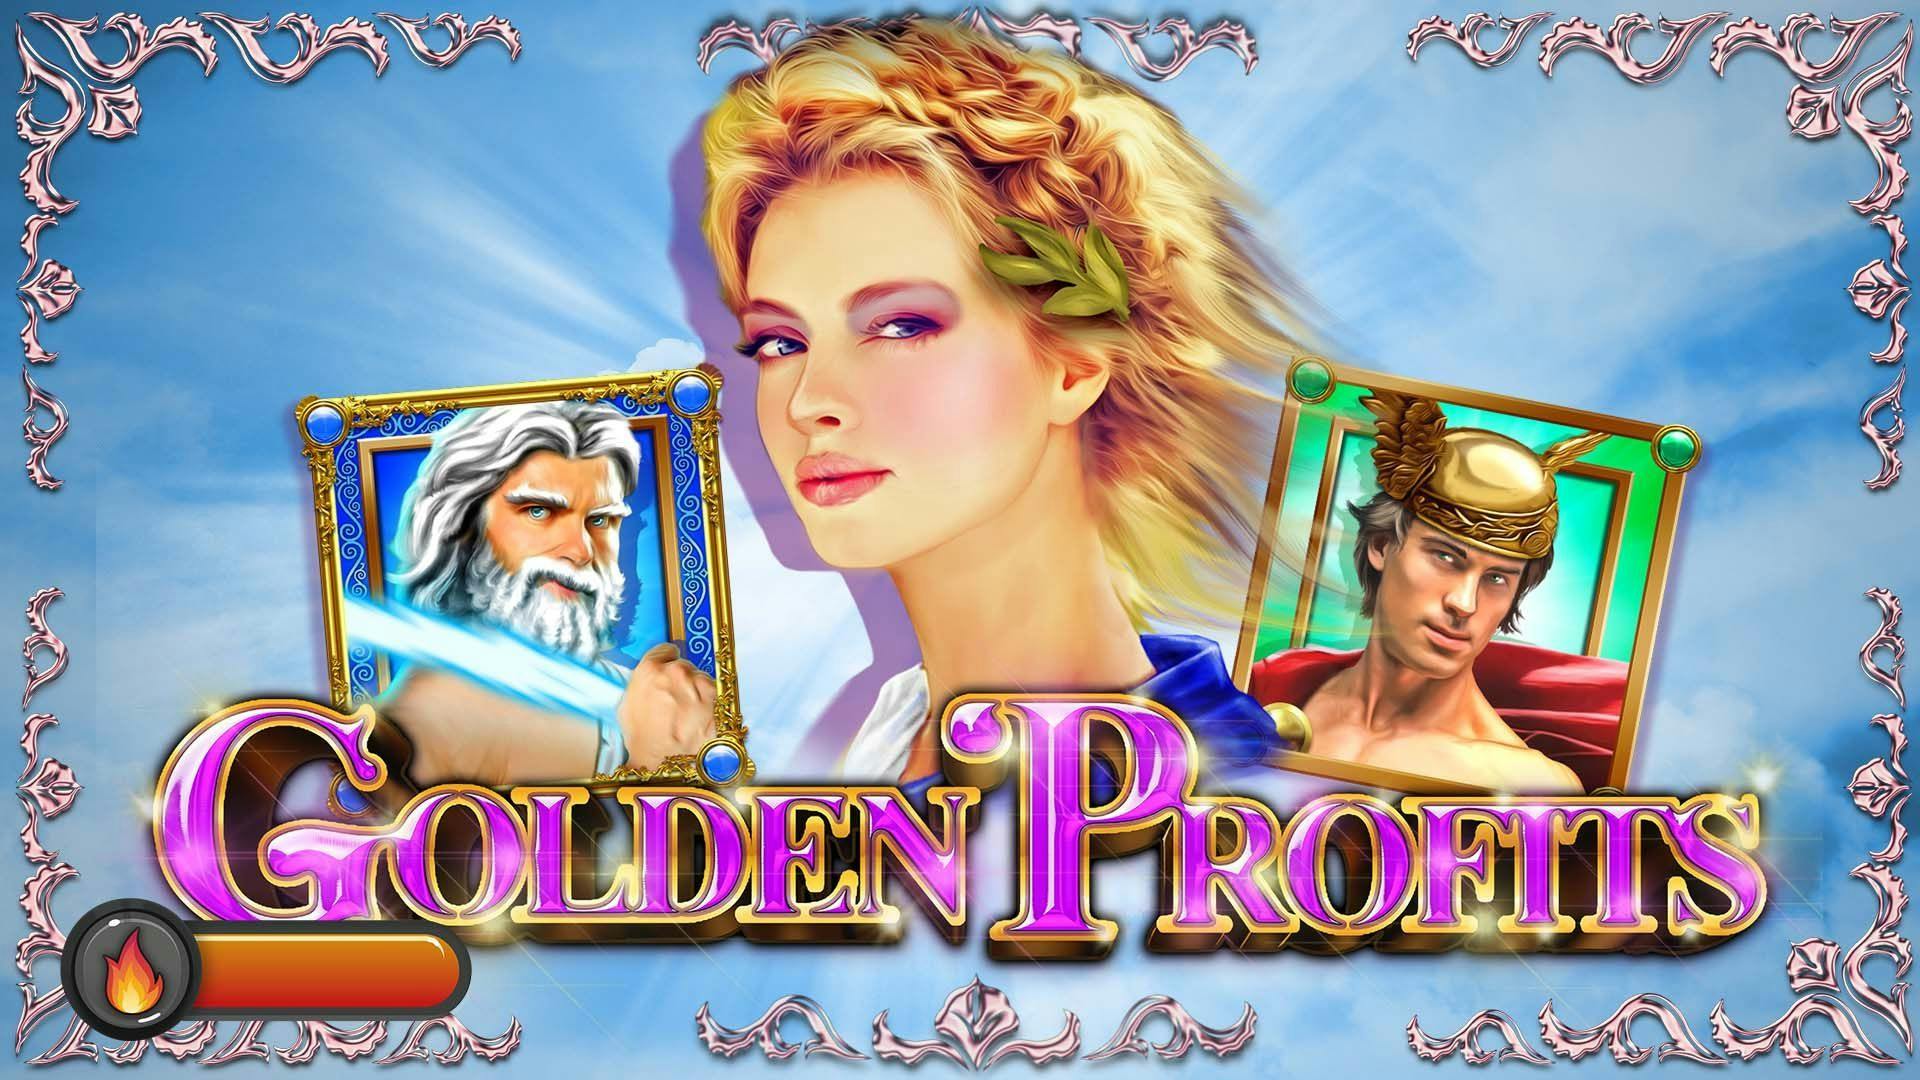 Golden Profits Slot Machine Online Free Game Play